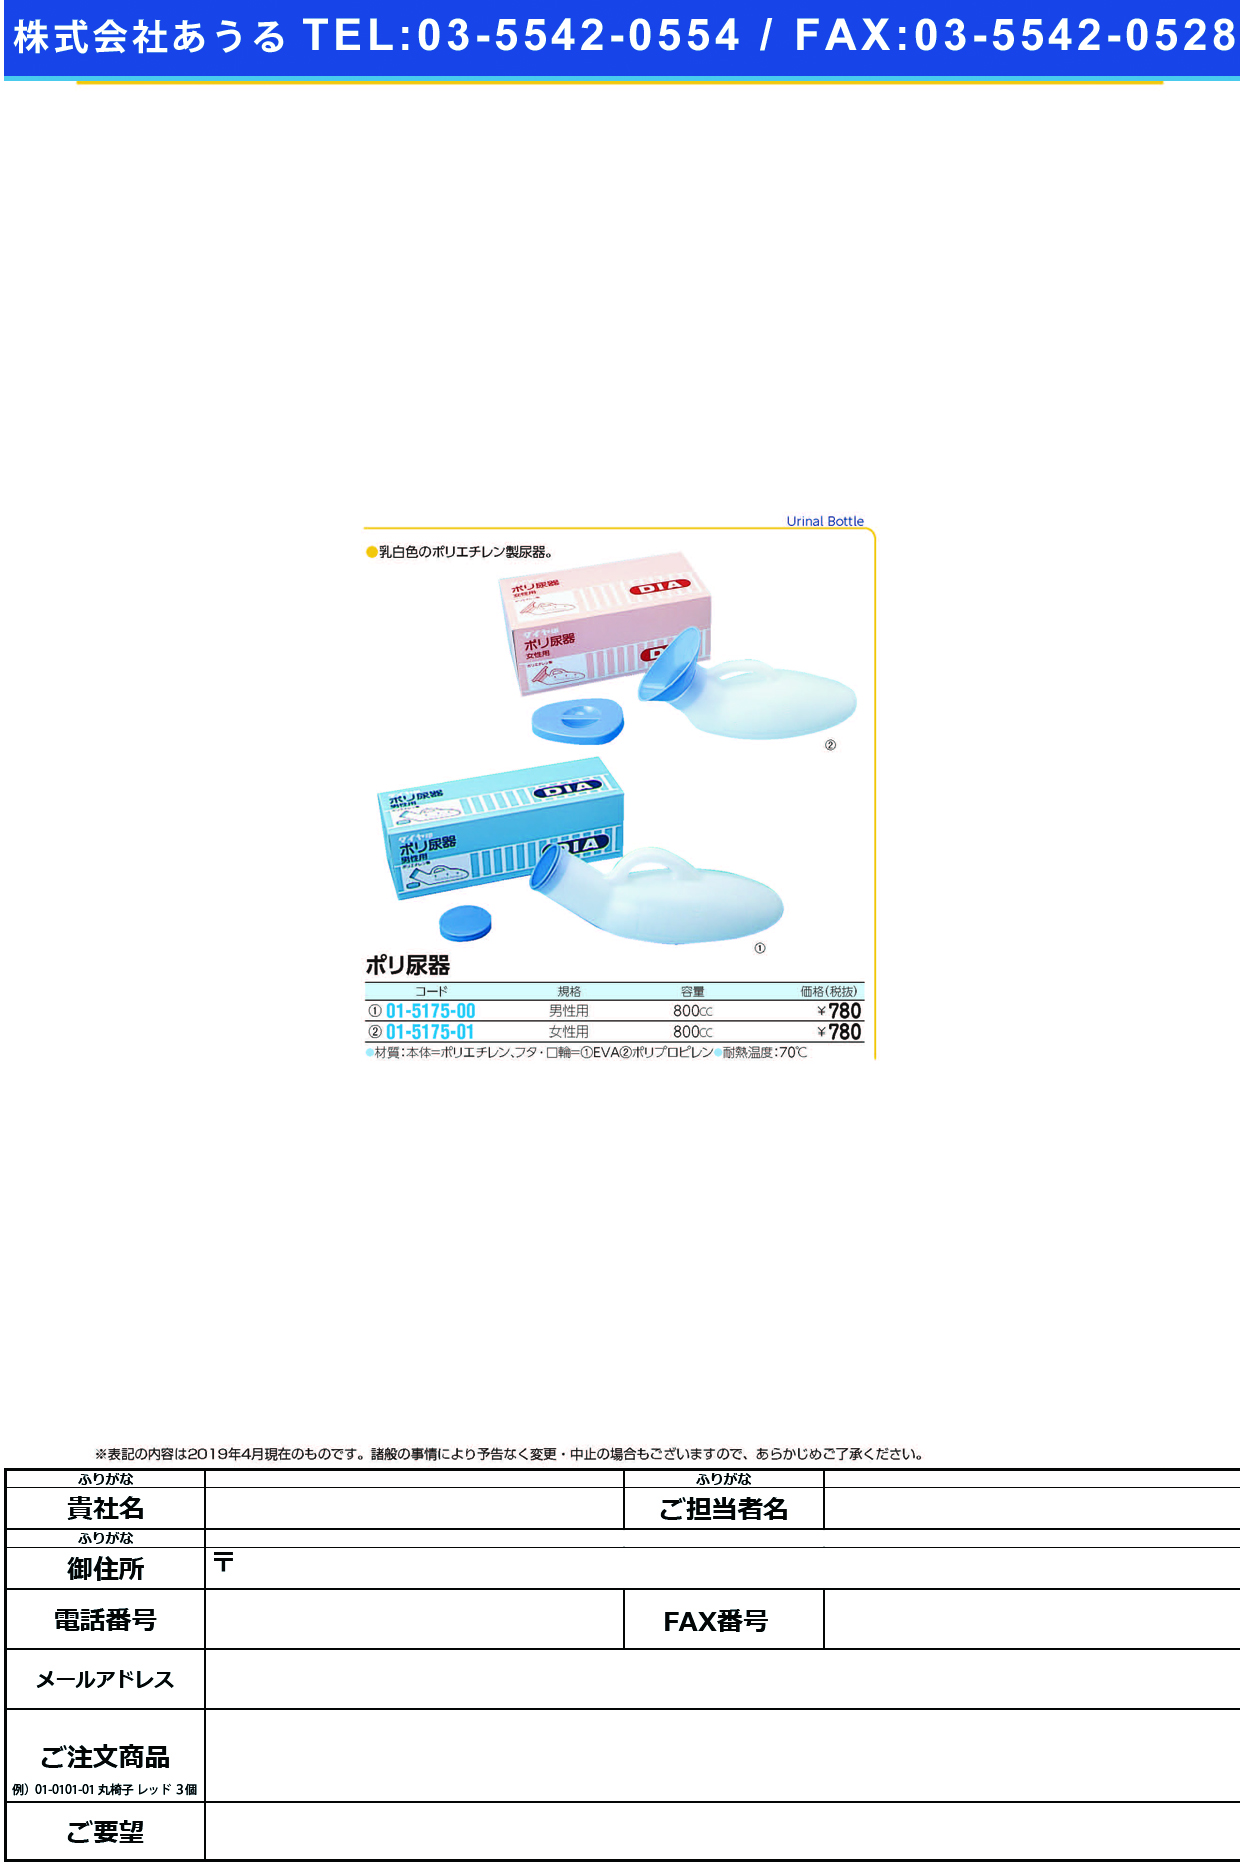 (01-5175-00)ダイヤ印ポリ尿器（男性用） 800CC ﾀﾞｲﾔｼﾞﾙｼﾎﾟﾘﾆｮｳｷﾀﾞﾝｾｲ【1個単位】【2019年カタログ商品】